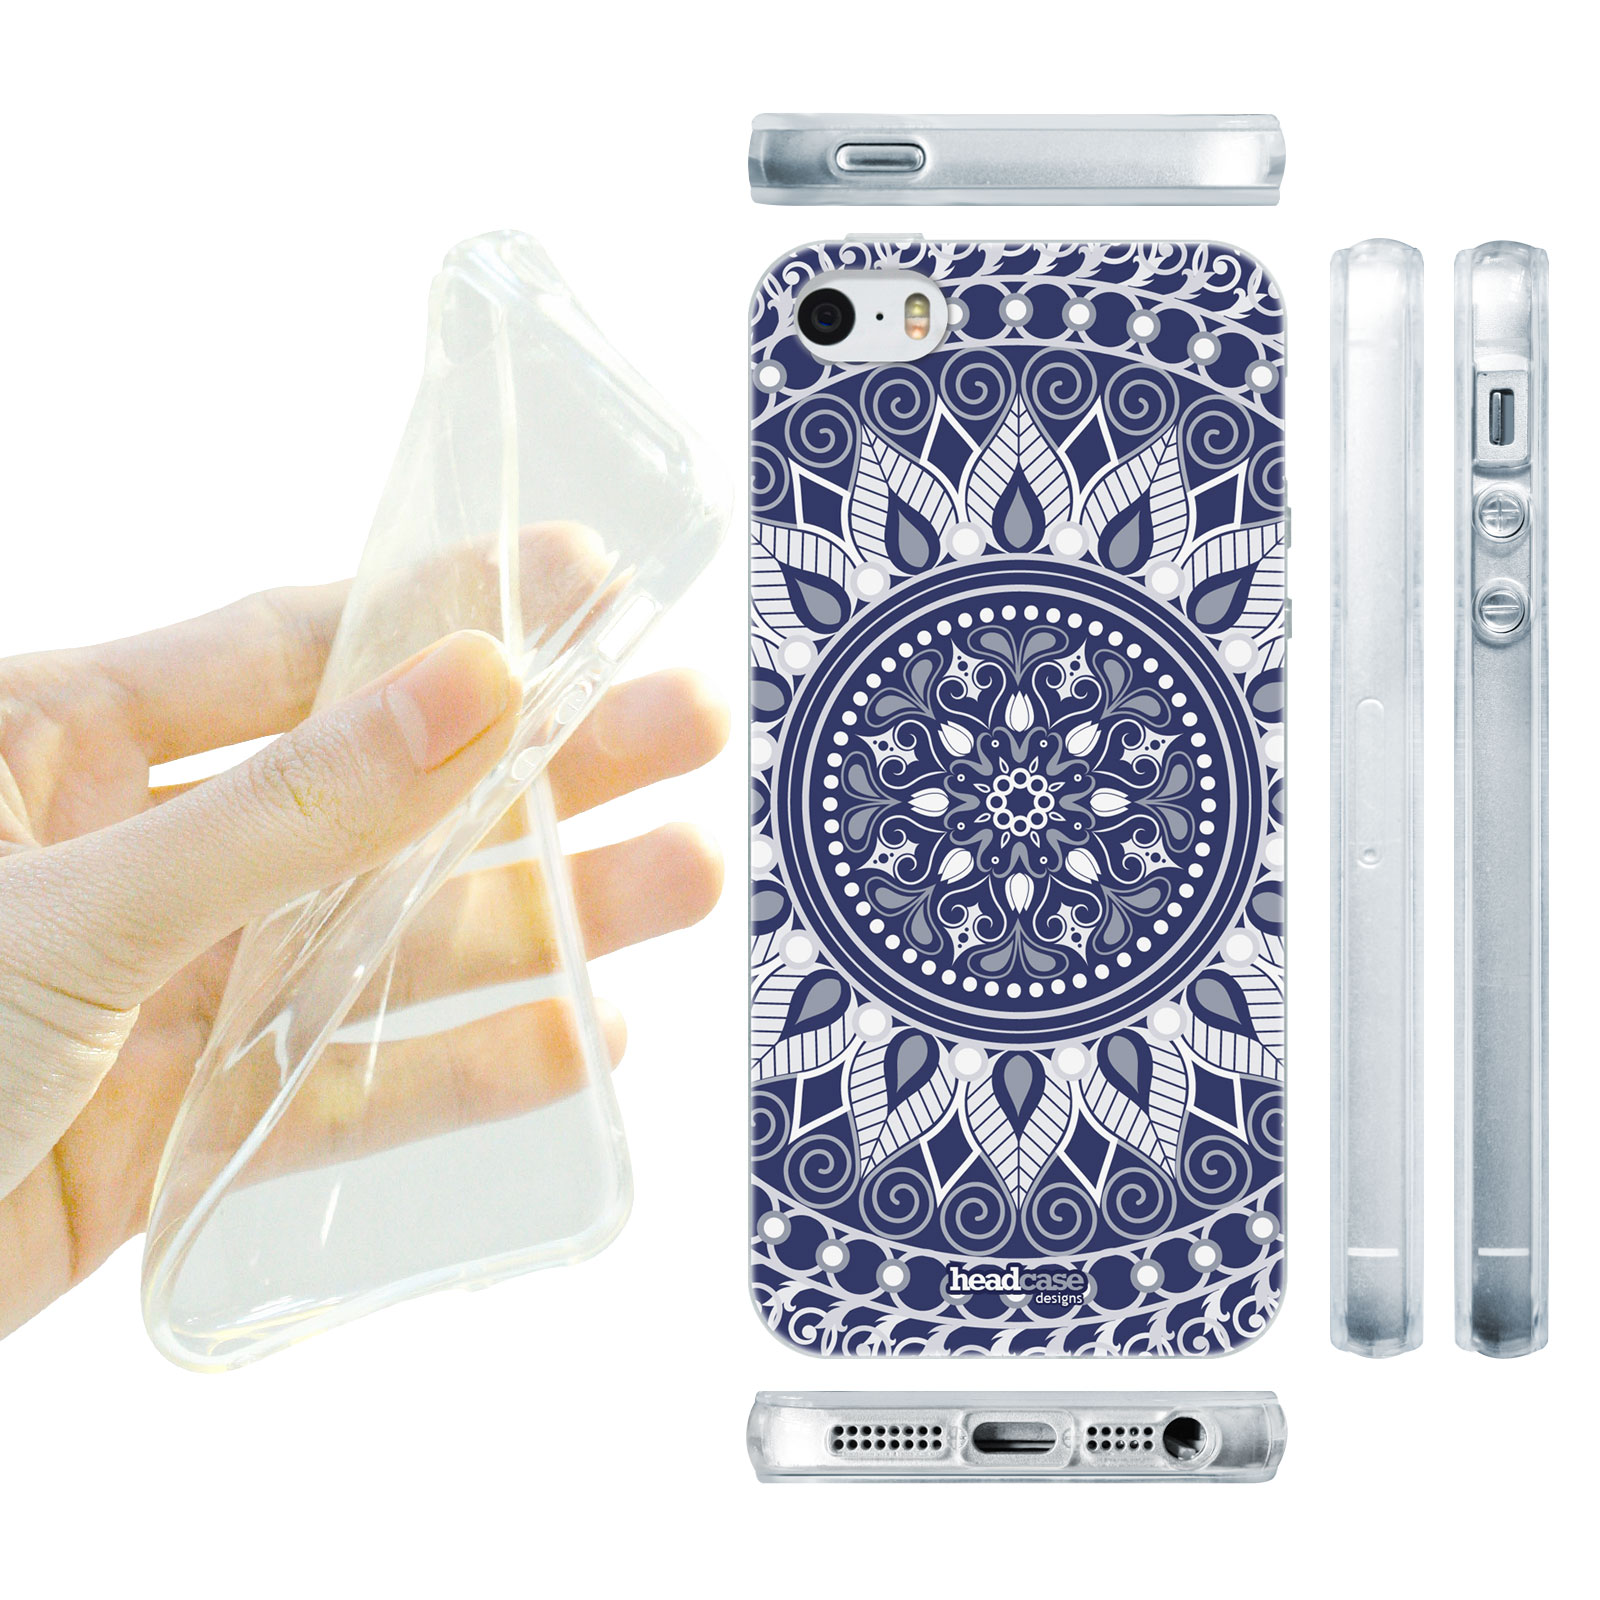 HEAD CASE silikonový obal na mobil Iphone 5/5S  vzor mandala indie modrá barva